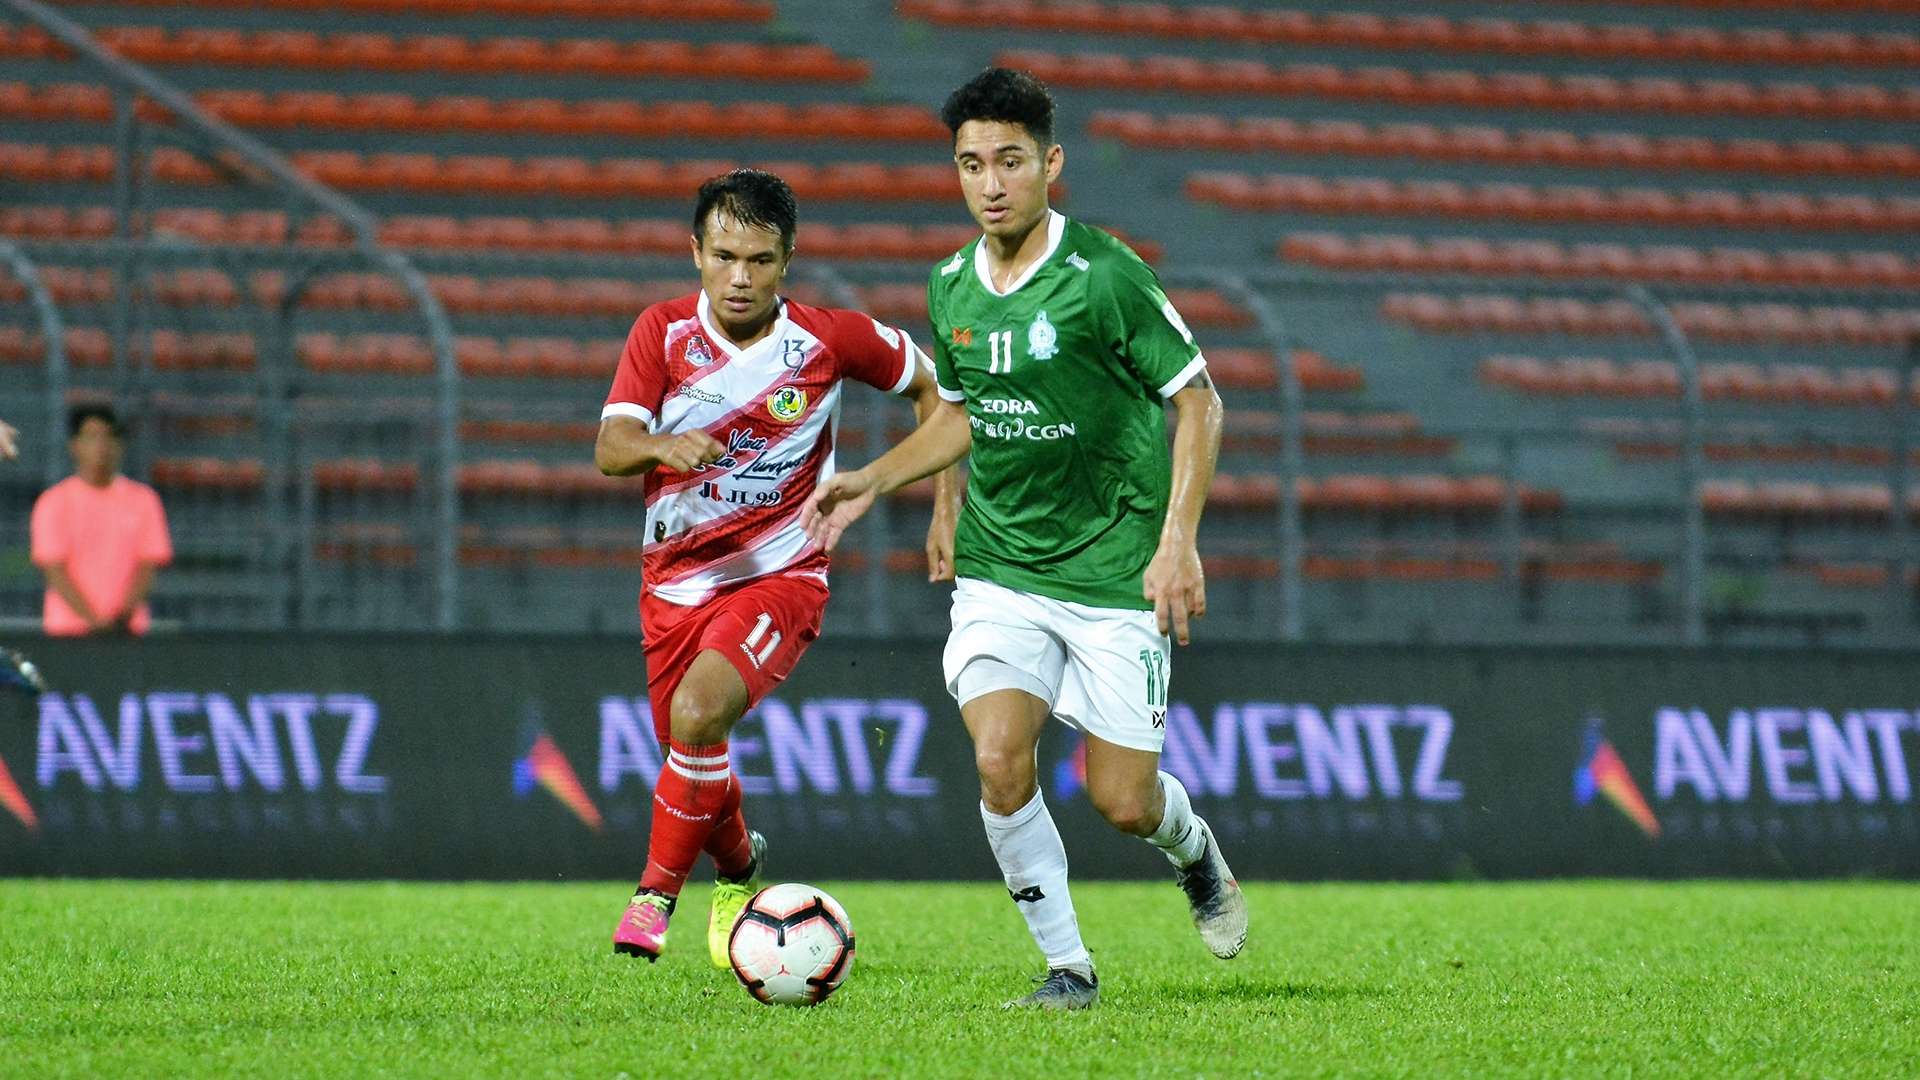 Patrick Reichelt, Kuala Lumpur v Melaka, Malaysia Super League, 19 Jun 2019